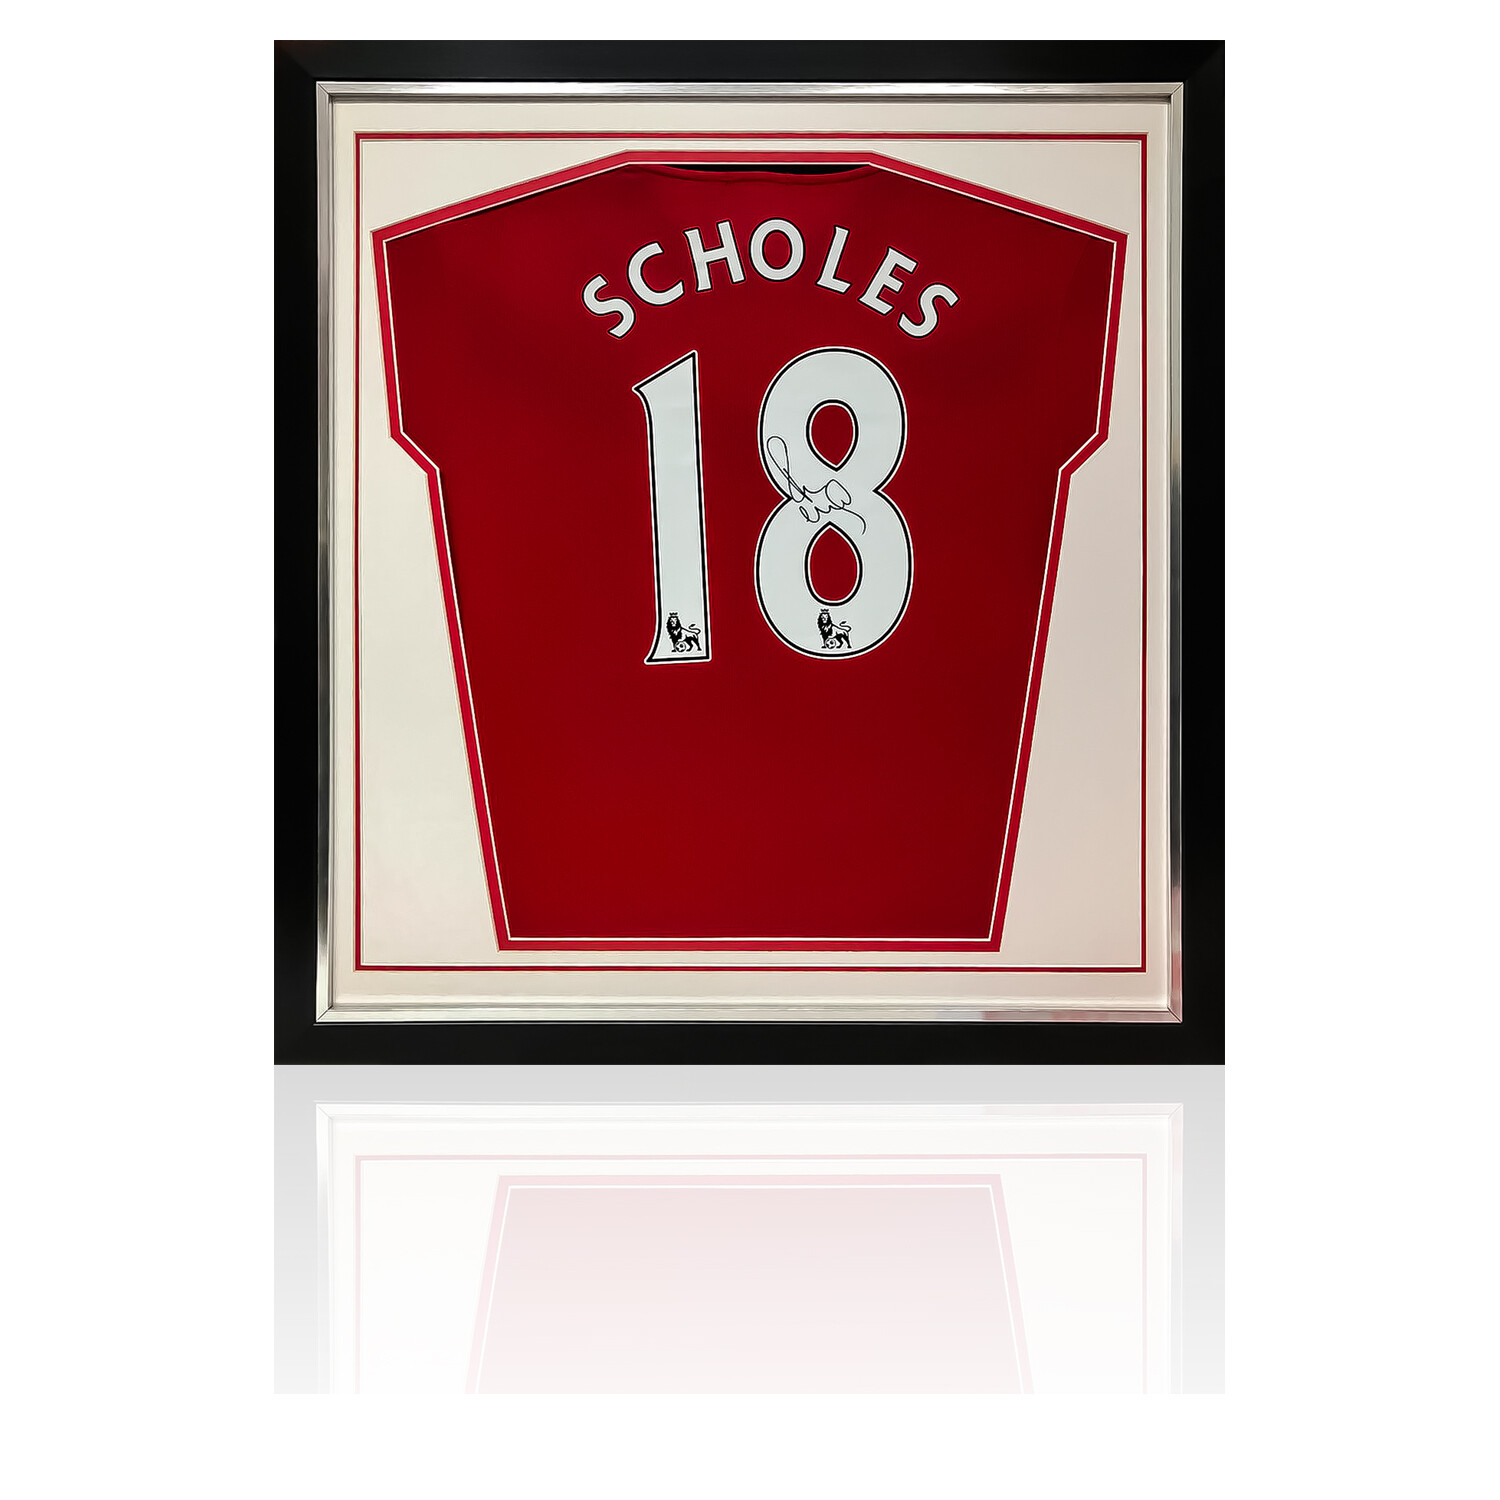 Paul Scholes Signed & Framed Manchester United Shirt